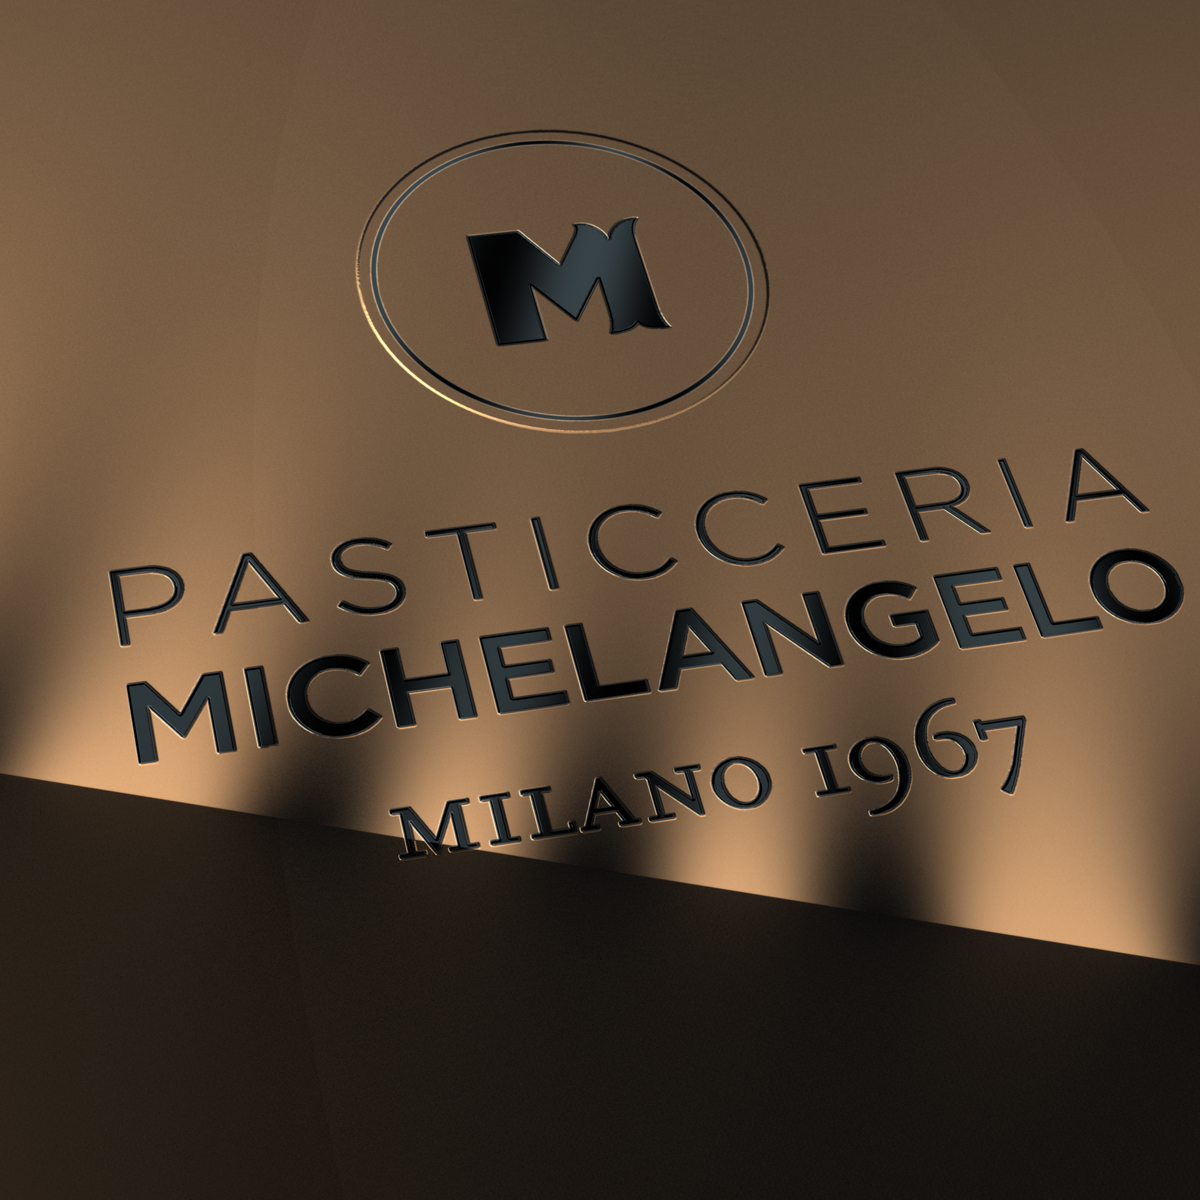 Pasticceria Michelangelo